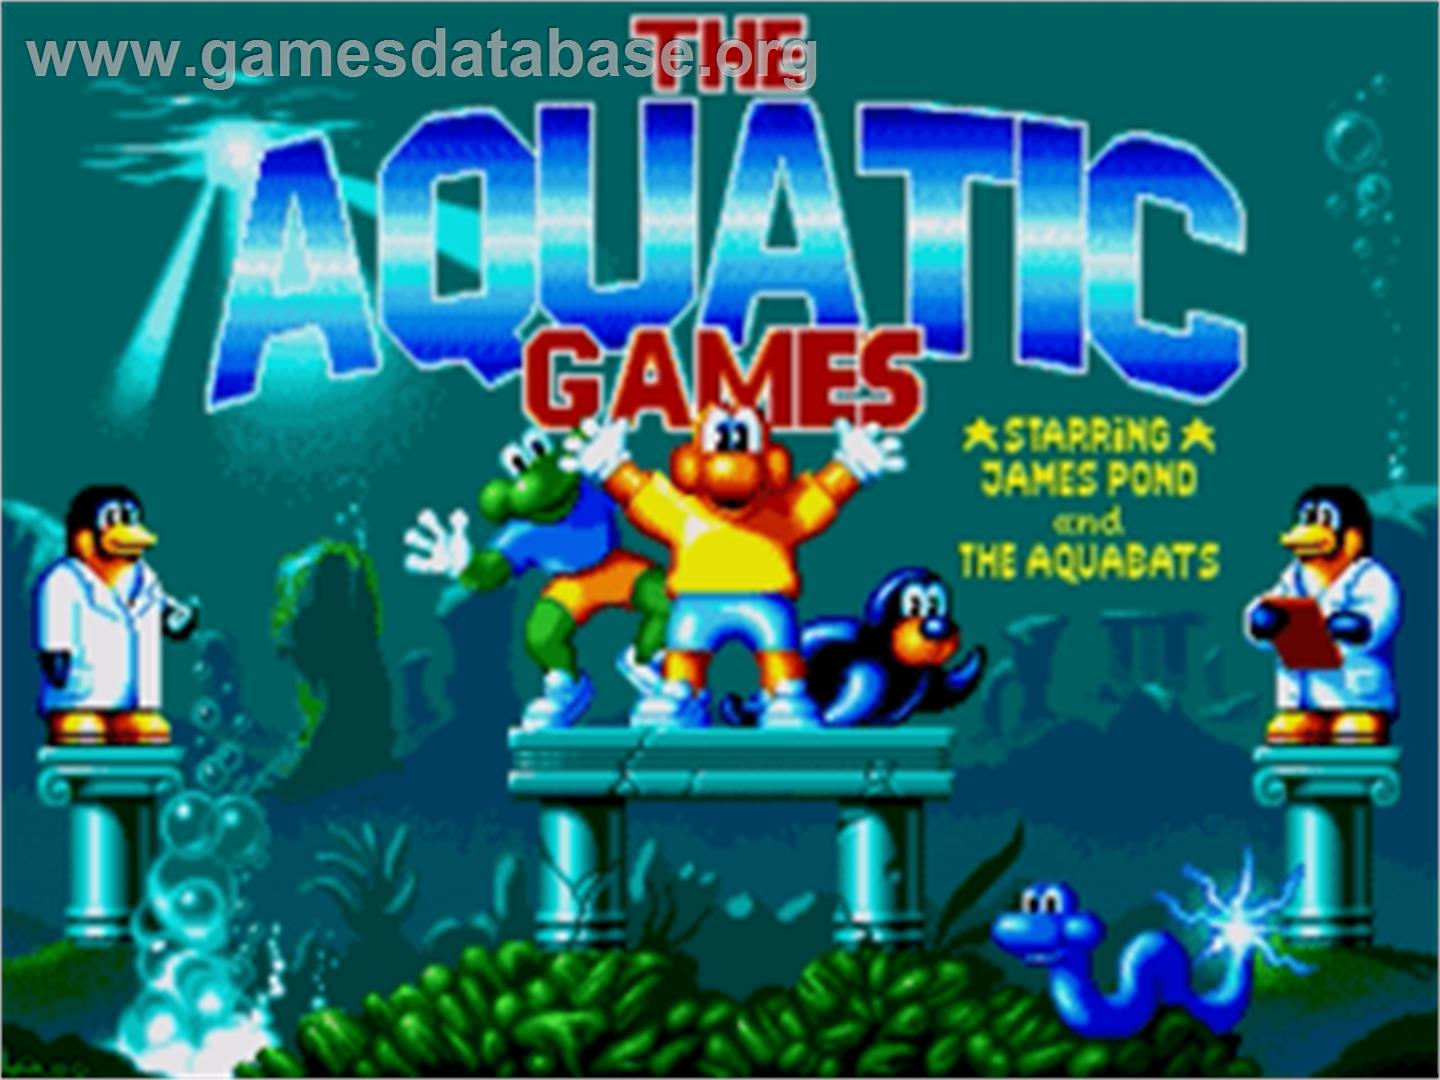 Aquatic Games: Starring James Pond, The - Sega Nomad - Artwork - Title Screen